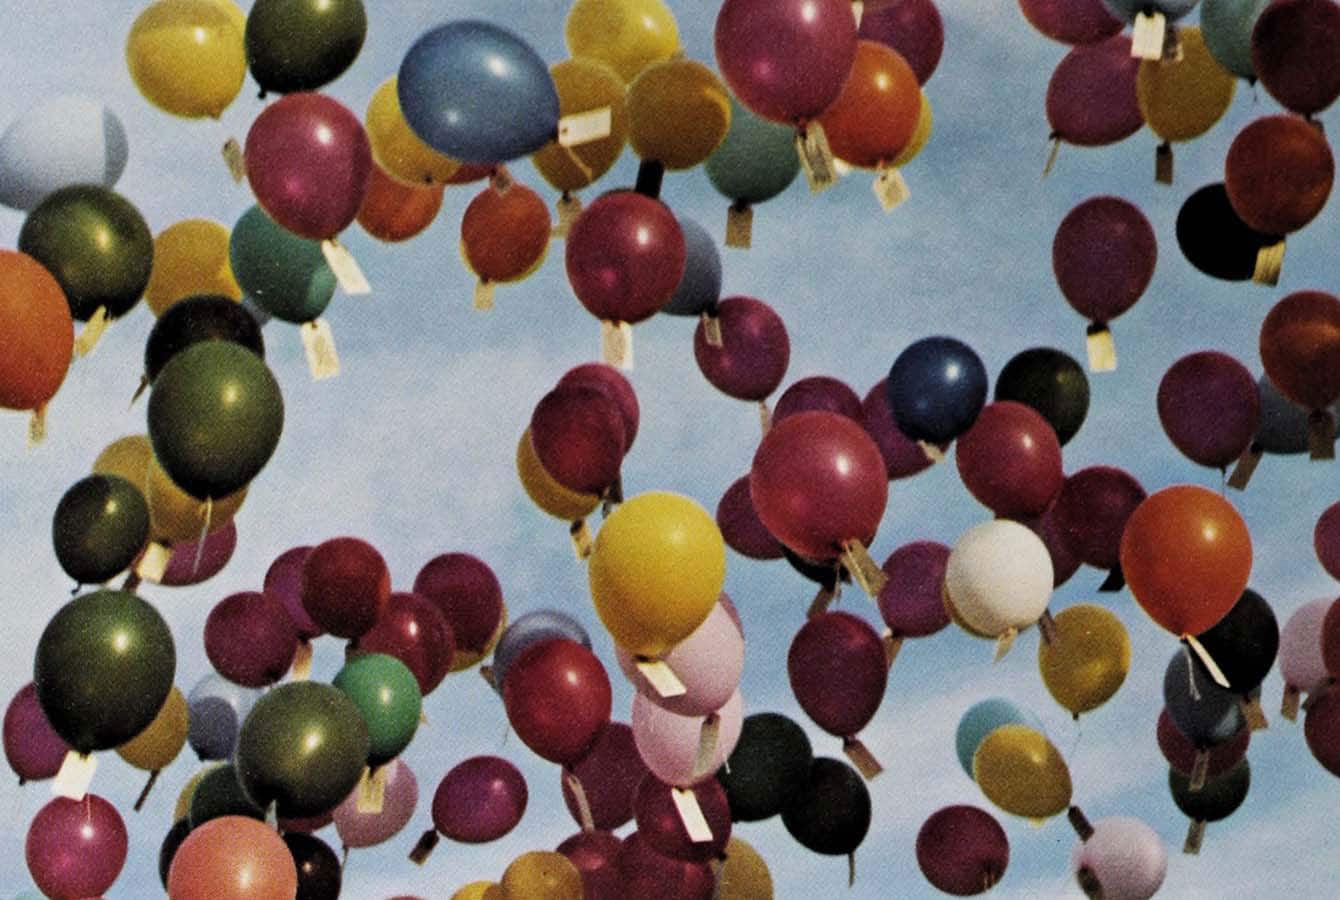 Balloon Day